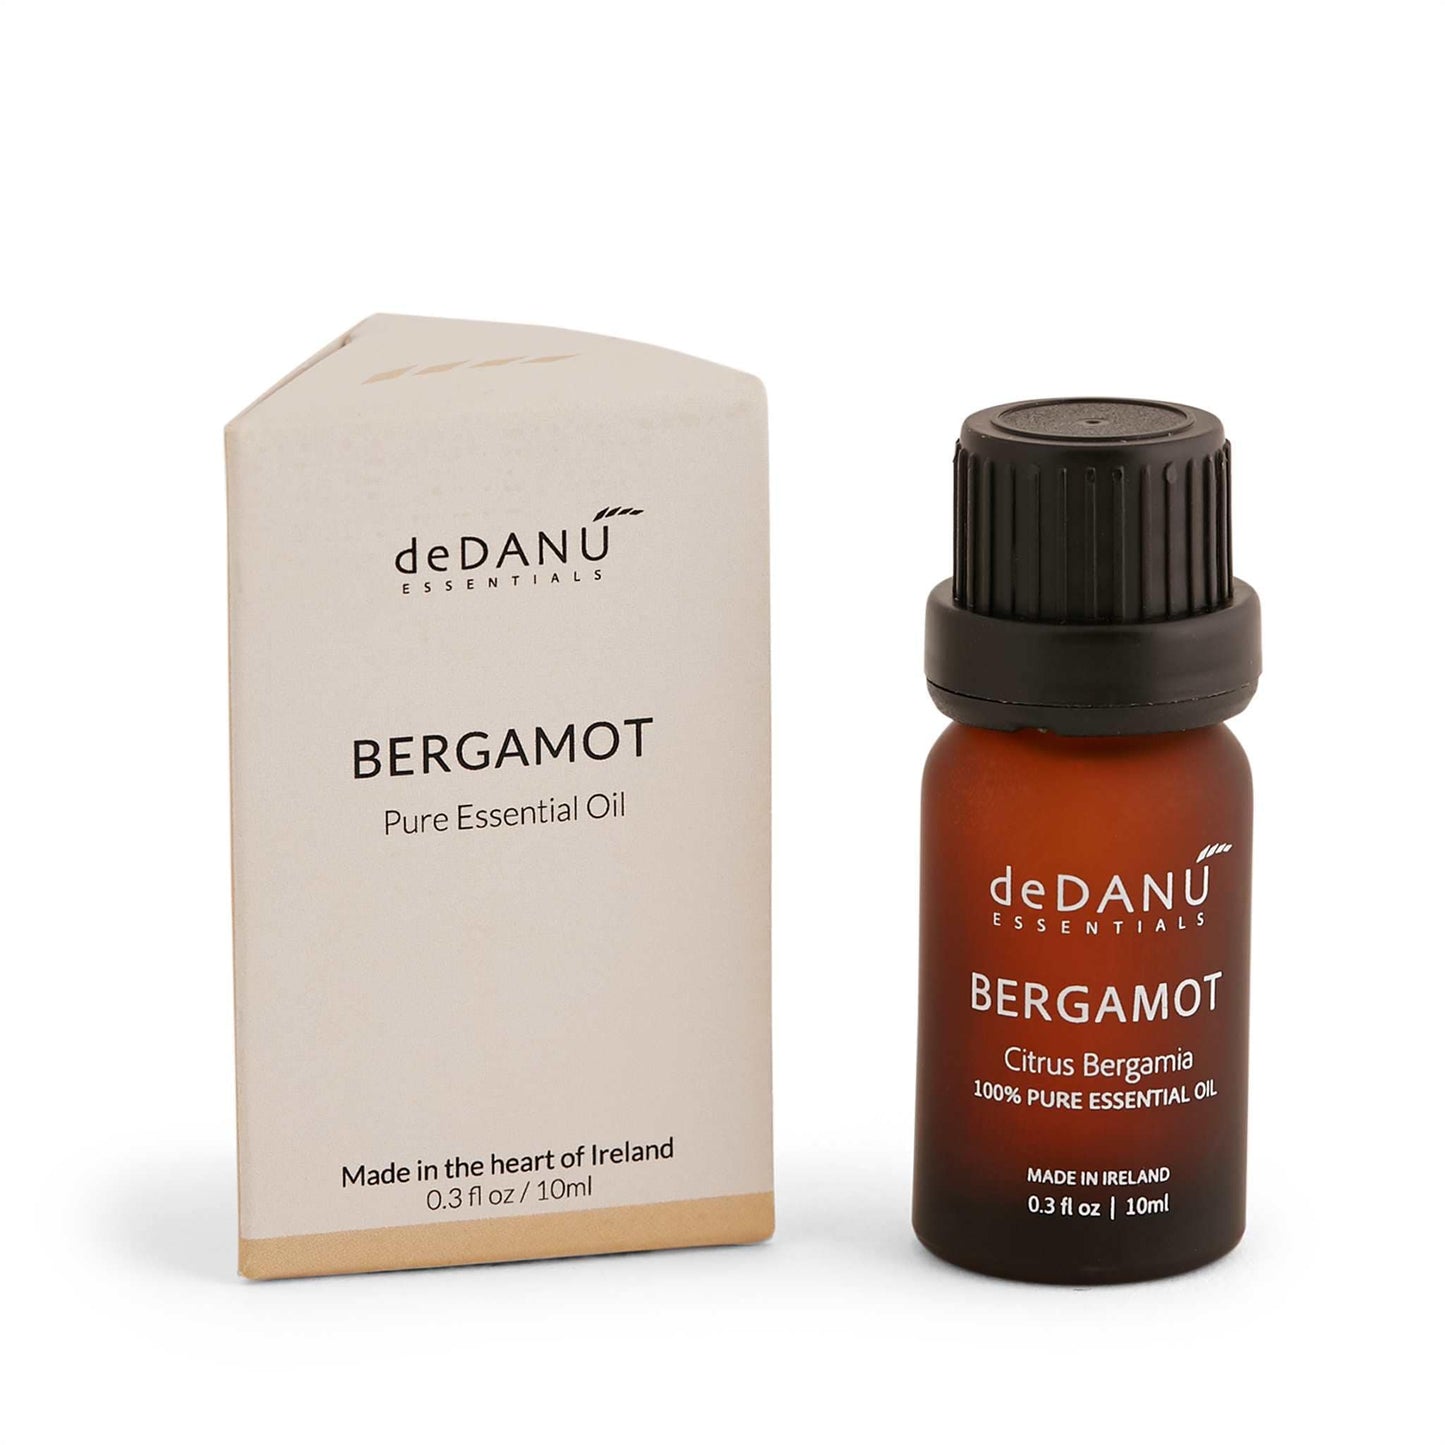 deDANU Essential Oil Bergamot Essential Oil 10ml – deDANÚ